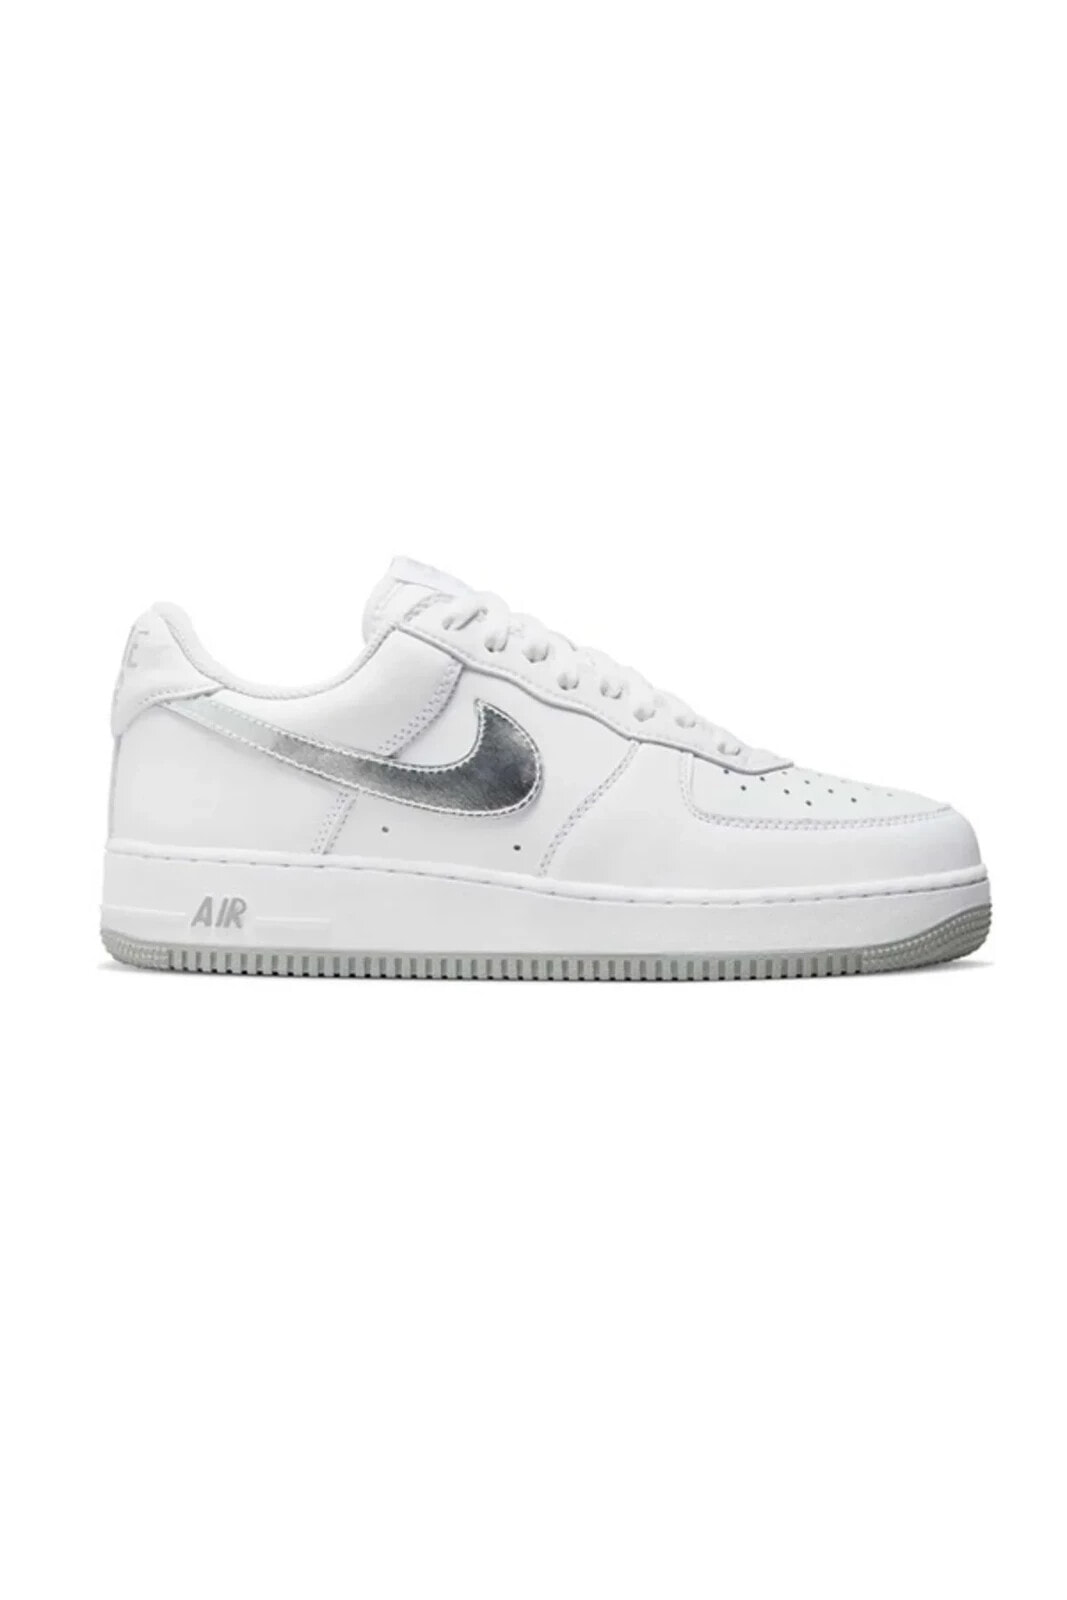 Air Force 1 Low Retro Beyaz Renk Sneaker Ayakkabı